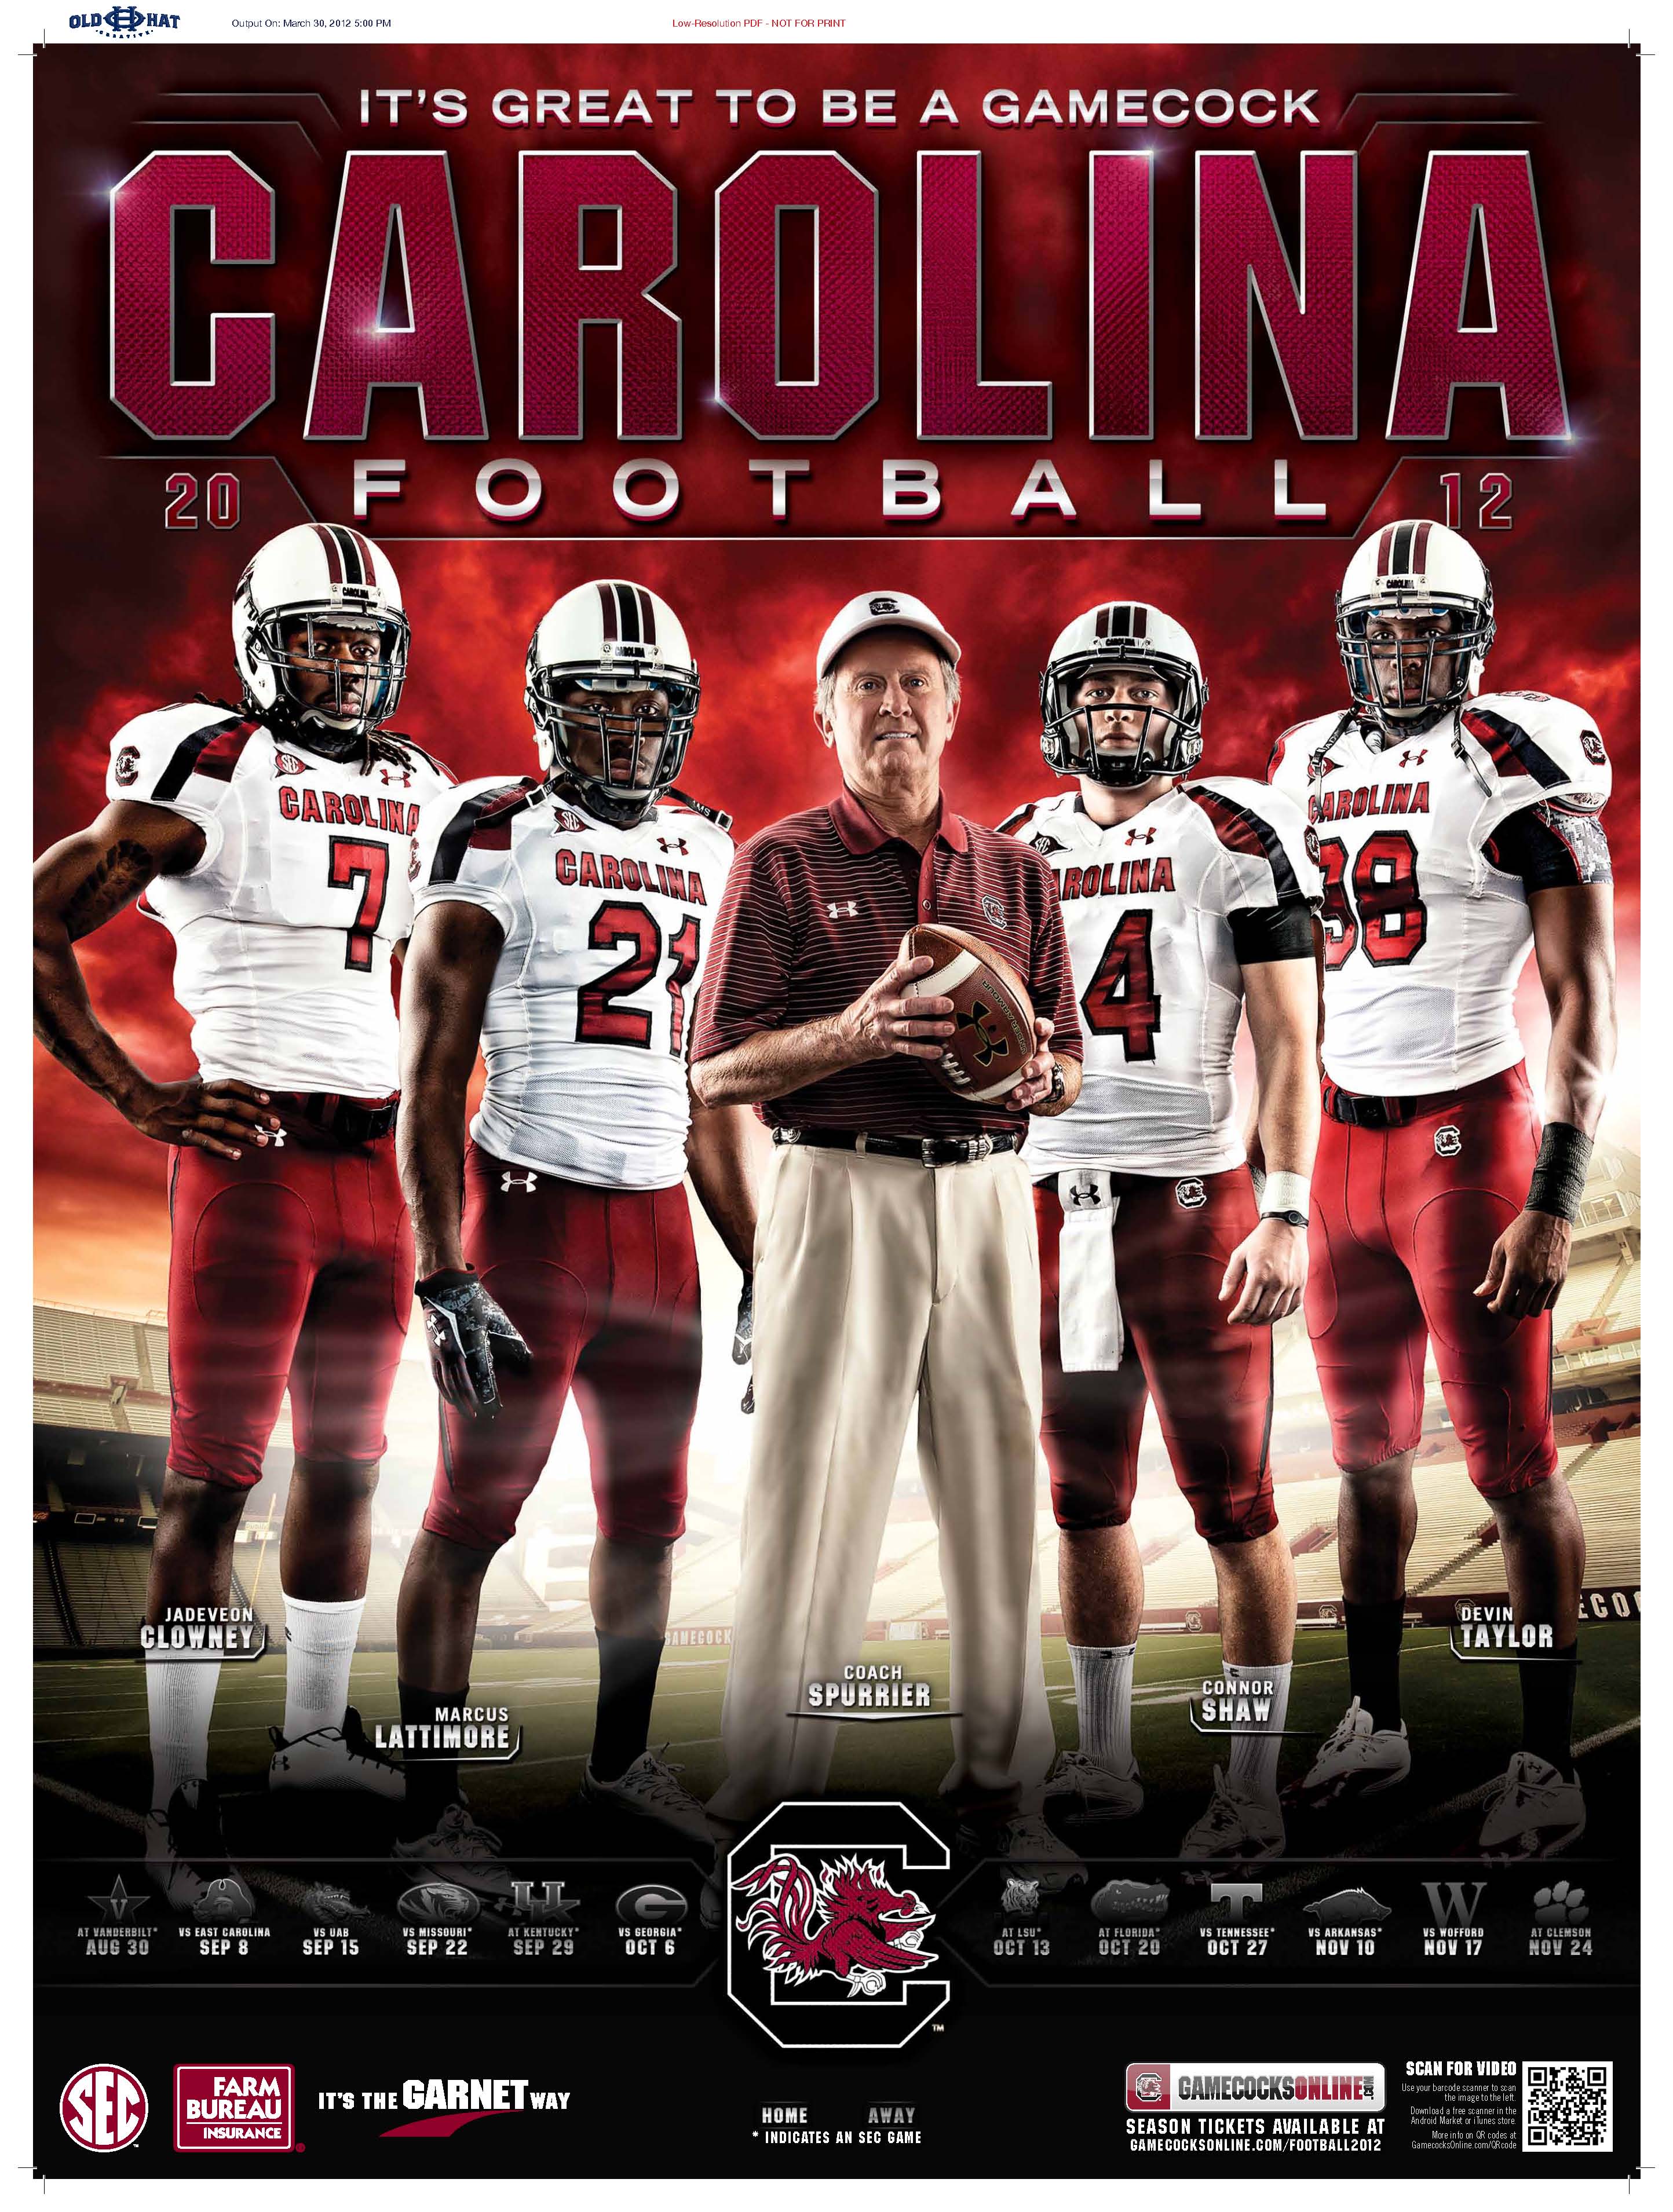 South Carolina Football Wallpaper Background Image